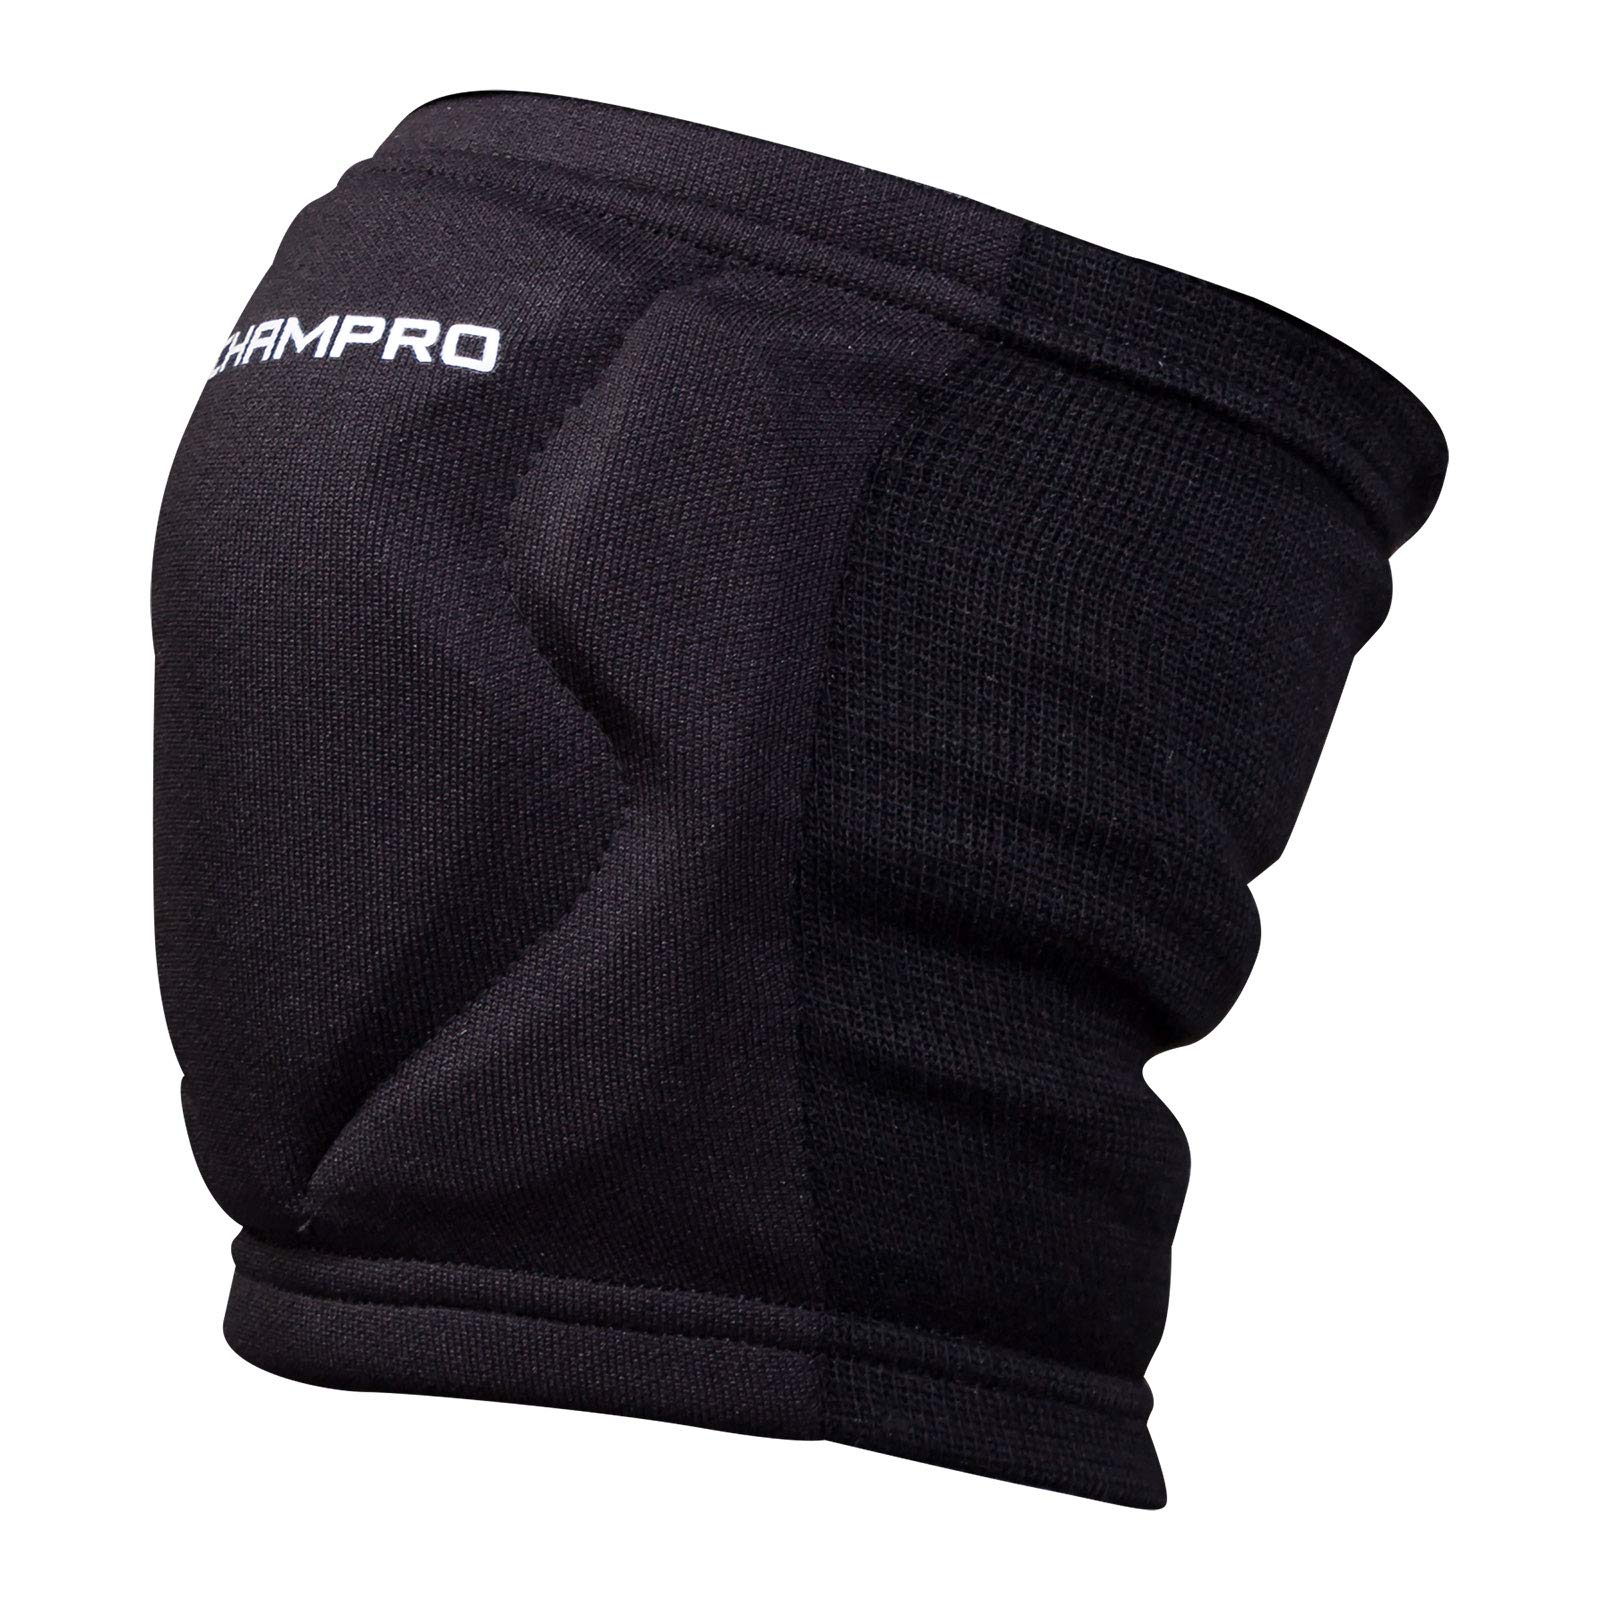 cHAMPRO MVP Low-Profile Volleyball Kneepad, Medium, Black, A3001BM